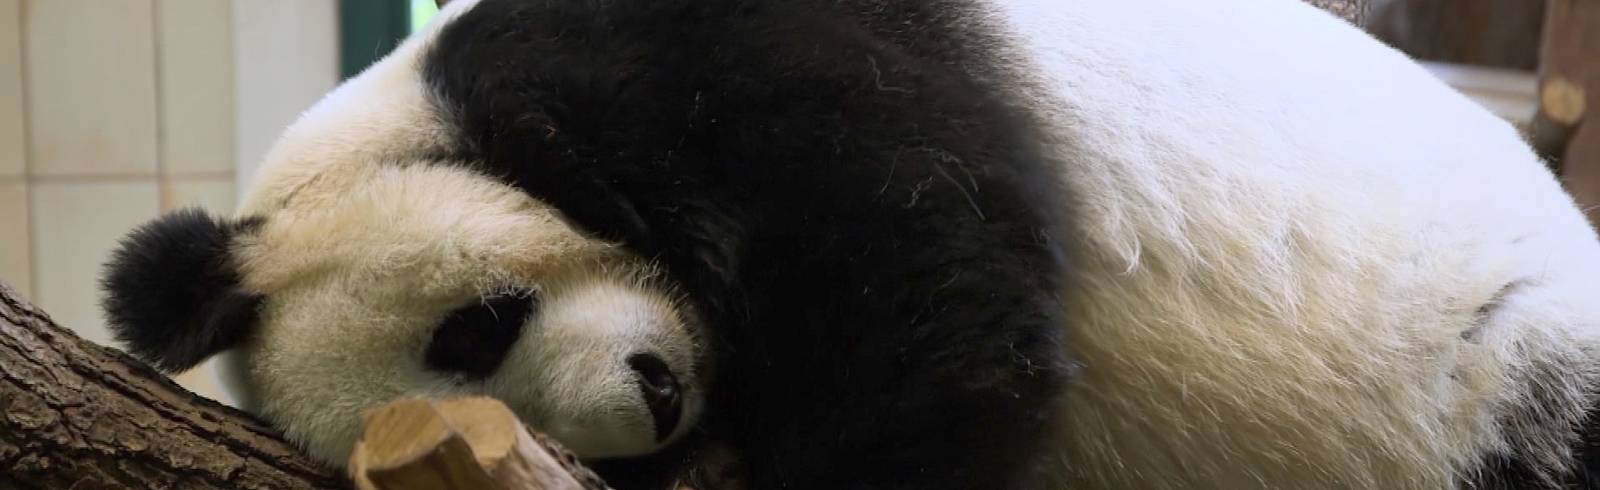 Bezirksflash: Yuan Yuan an Zoo Wien übergeben